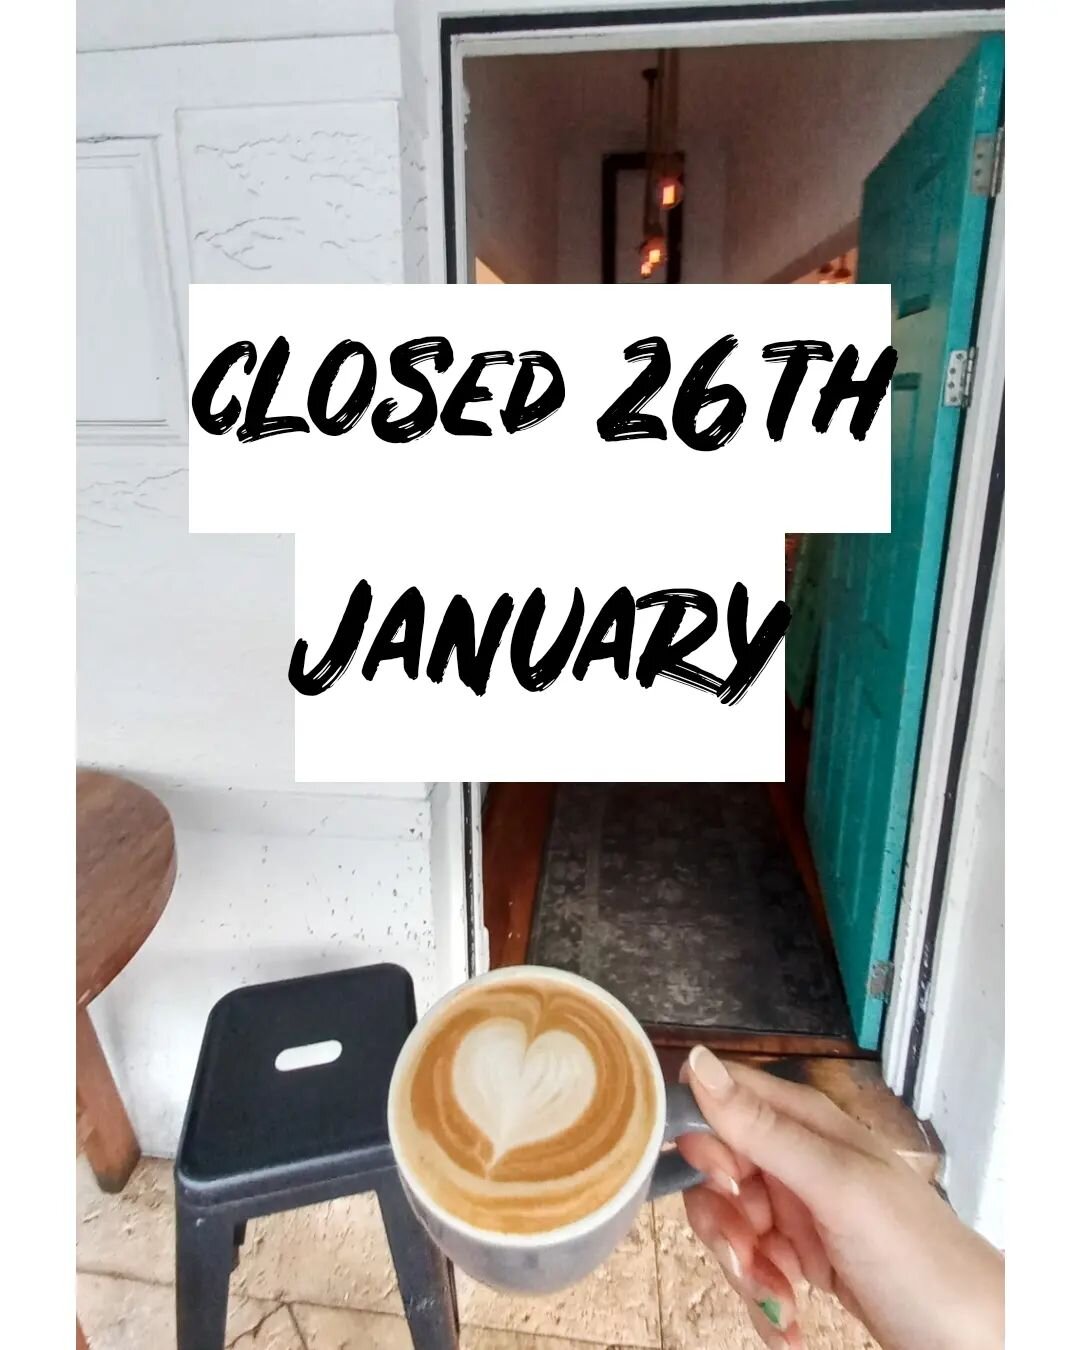 PSA: We are closed tomorrow, Thursday 26th of January.
.
.
#facefillingawesomeness #duckduckbruce #Fremantle #cafe #freocafe #dogfriendly #changethedate